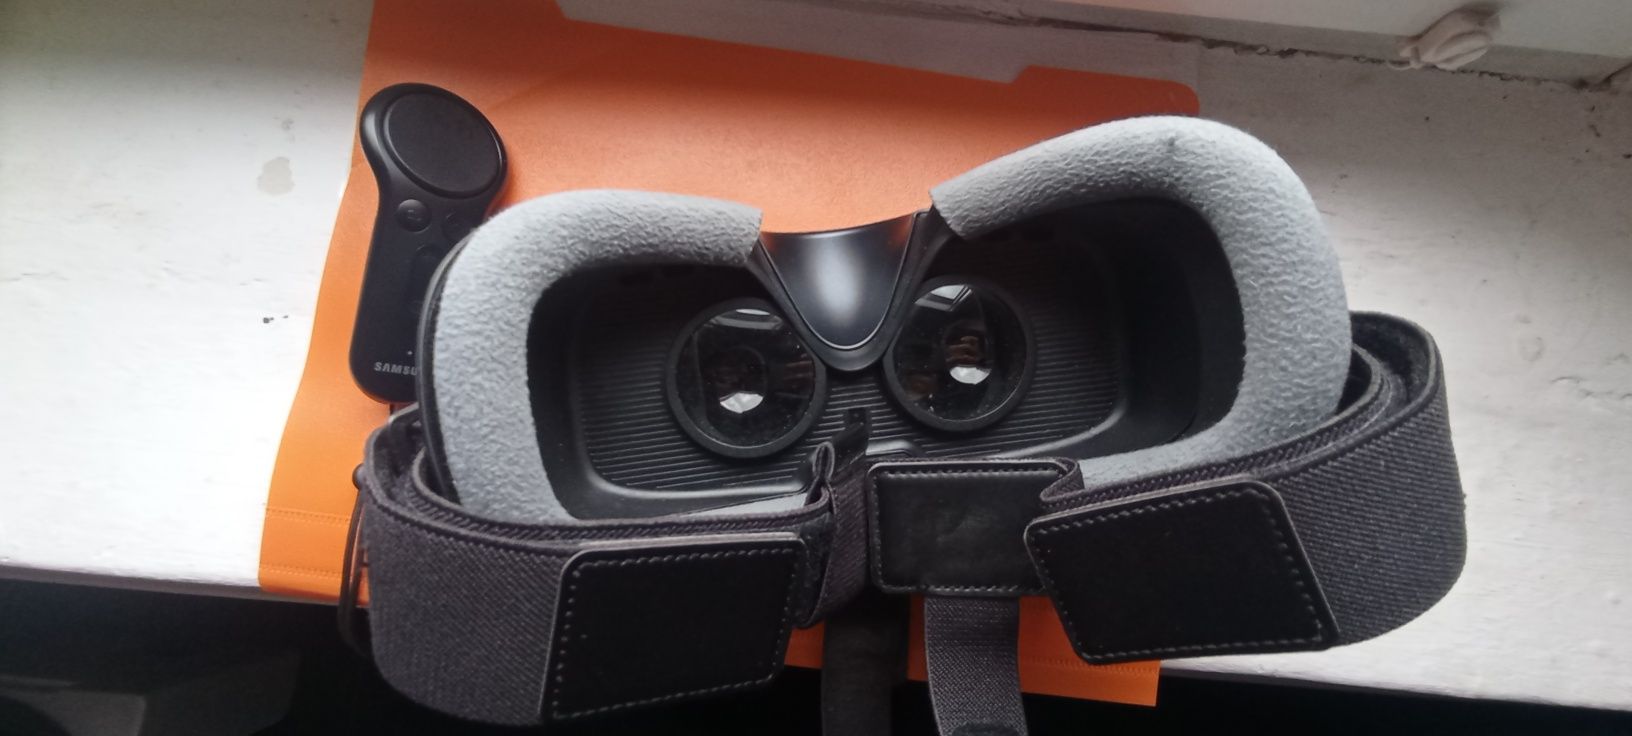 Casca VR Samsung oculus